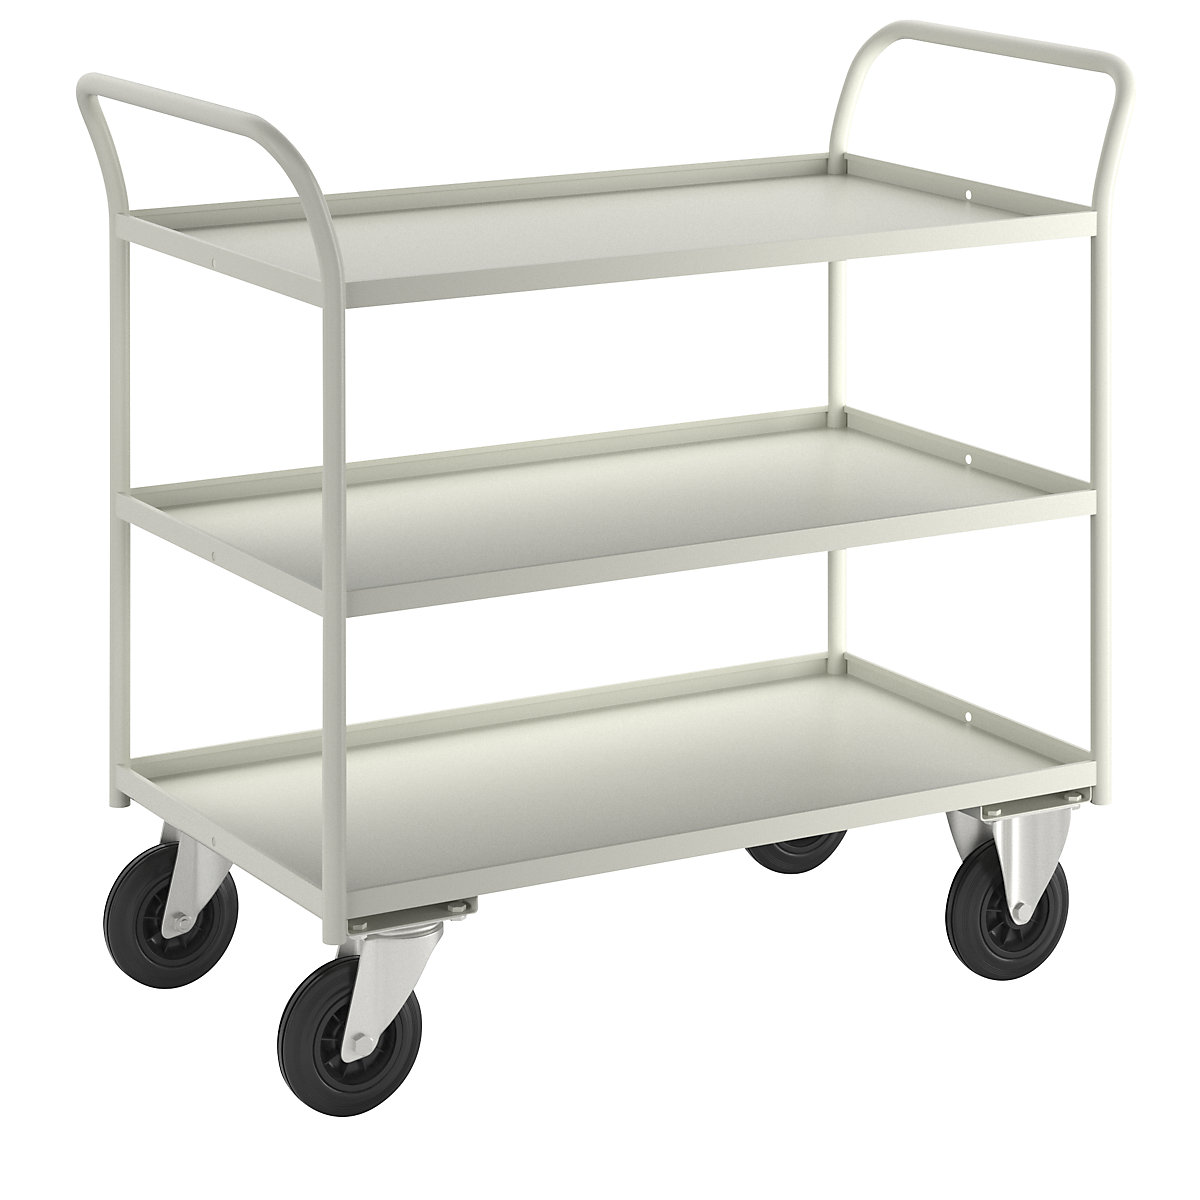 KM41 table trolley – Kongamek, 3 shelves with raised edges, LxWxH 1070 x 550 x 1000 mm, white, 2 swivel castors and 2 fixed castors-4